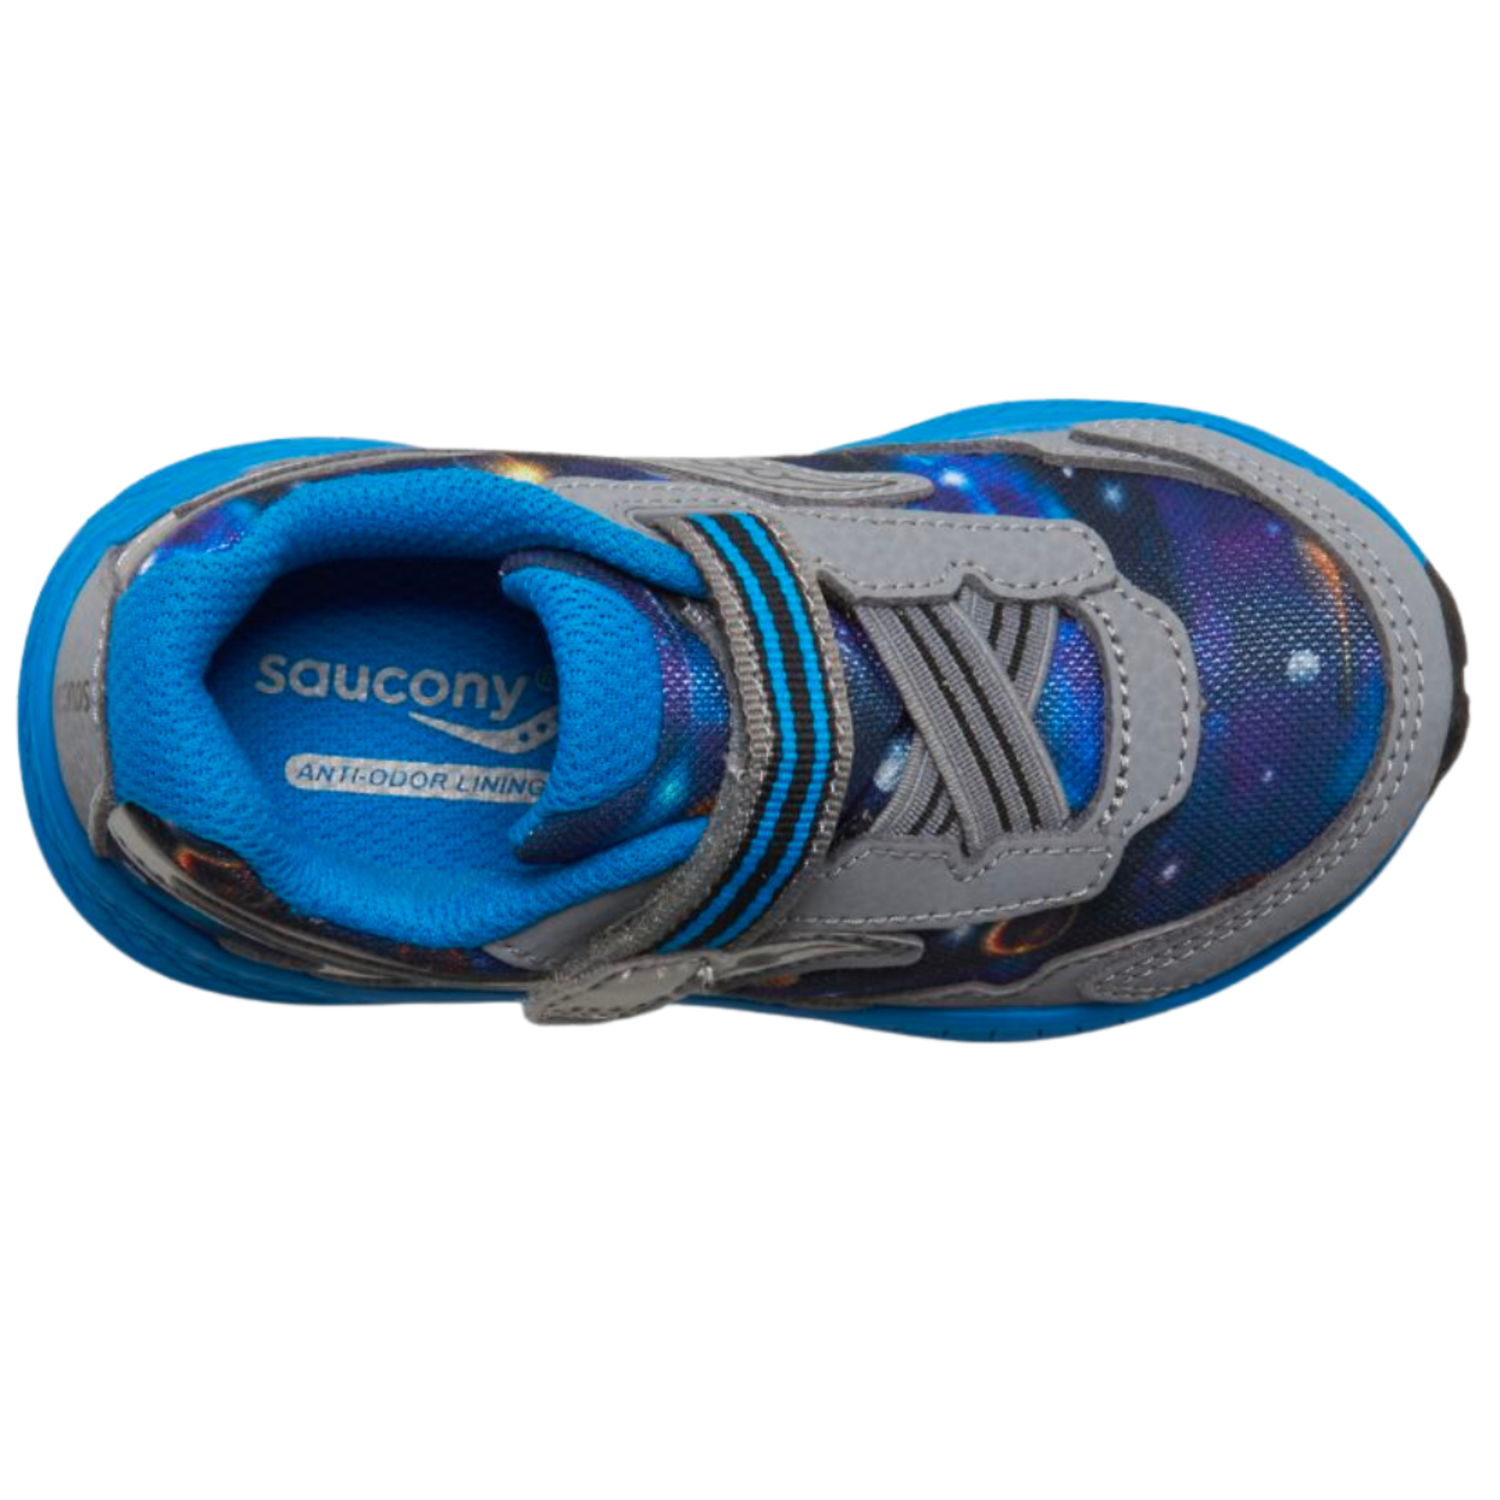 Saucony Ride 10 Jr Grey/Blue/Space - Kids Shoes in Canada - Kiddie